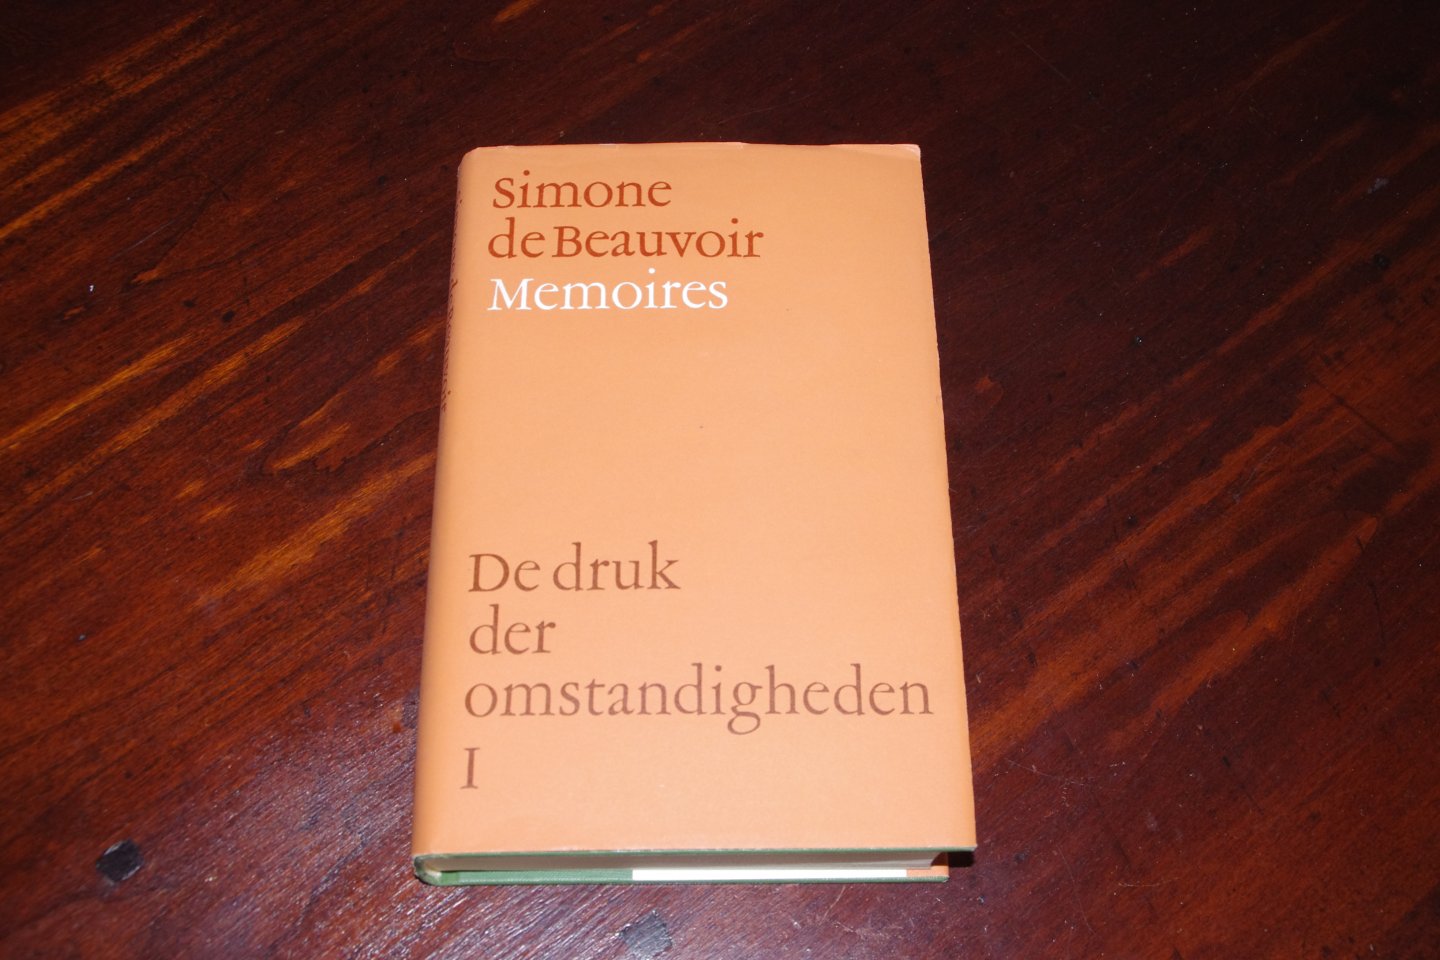 Beauvoir - Memoires / 1/ druk 1